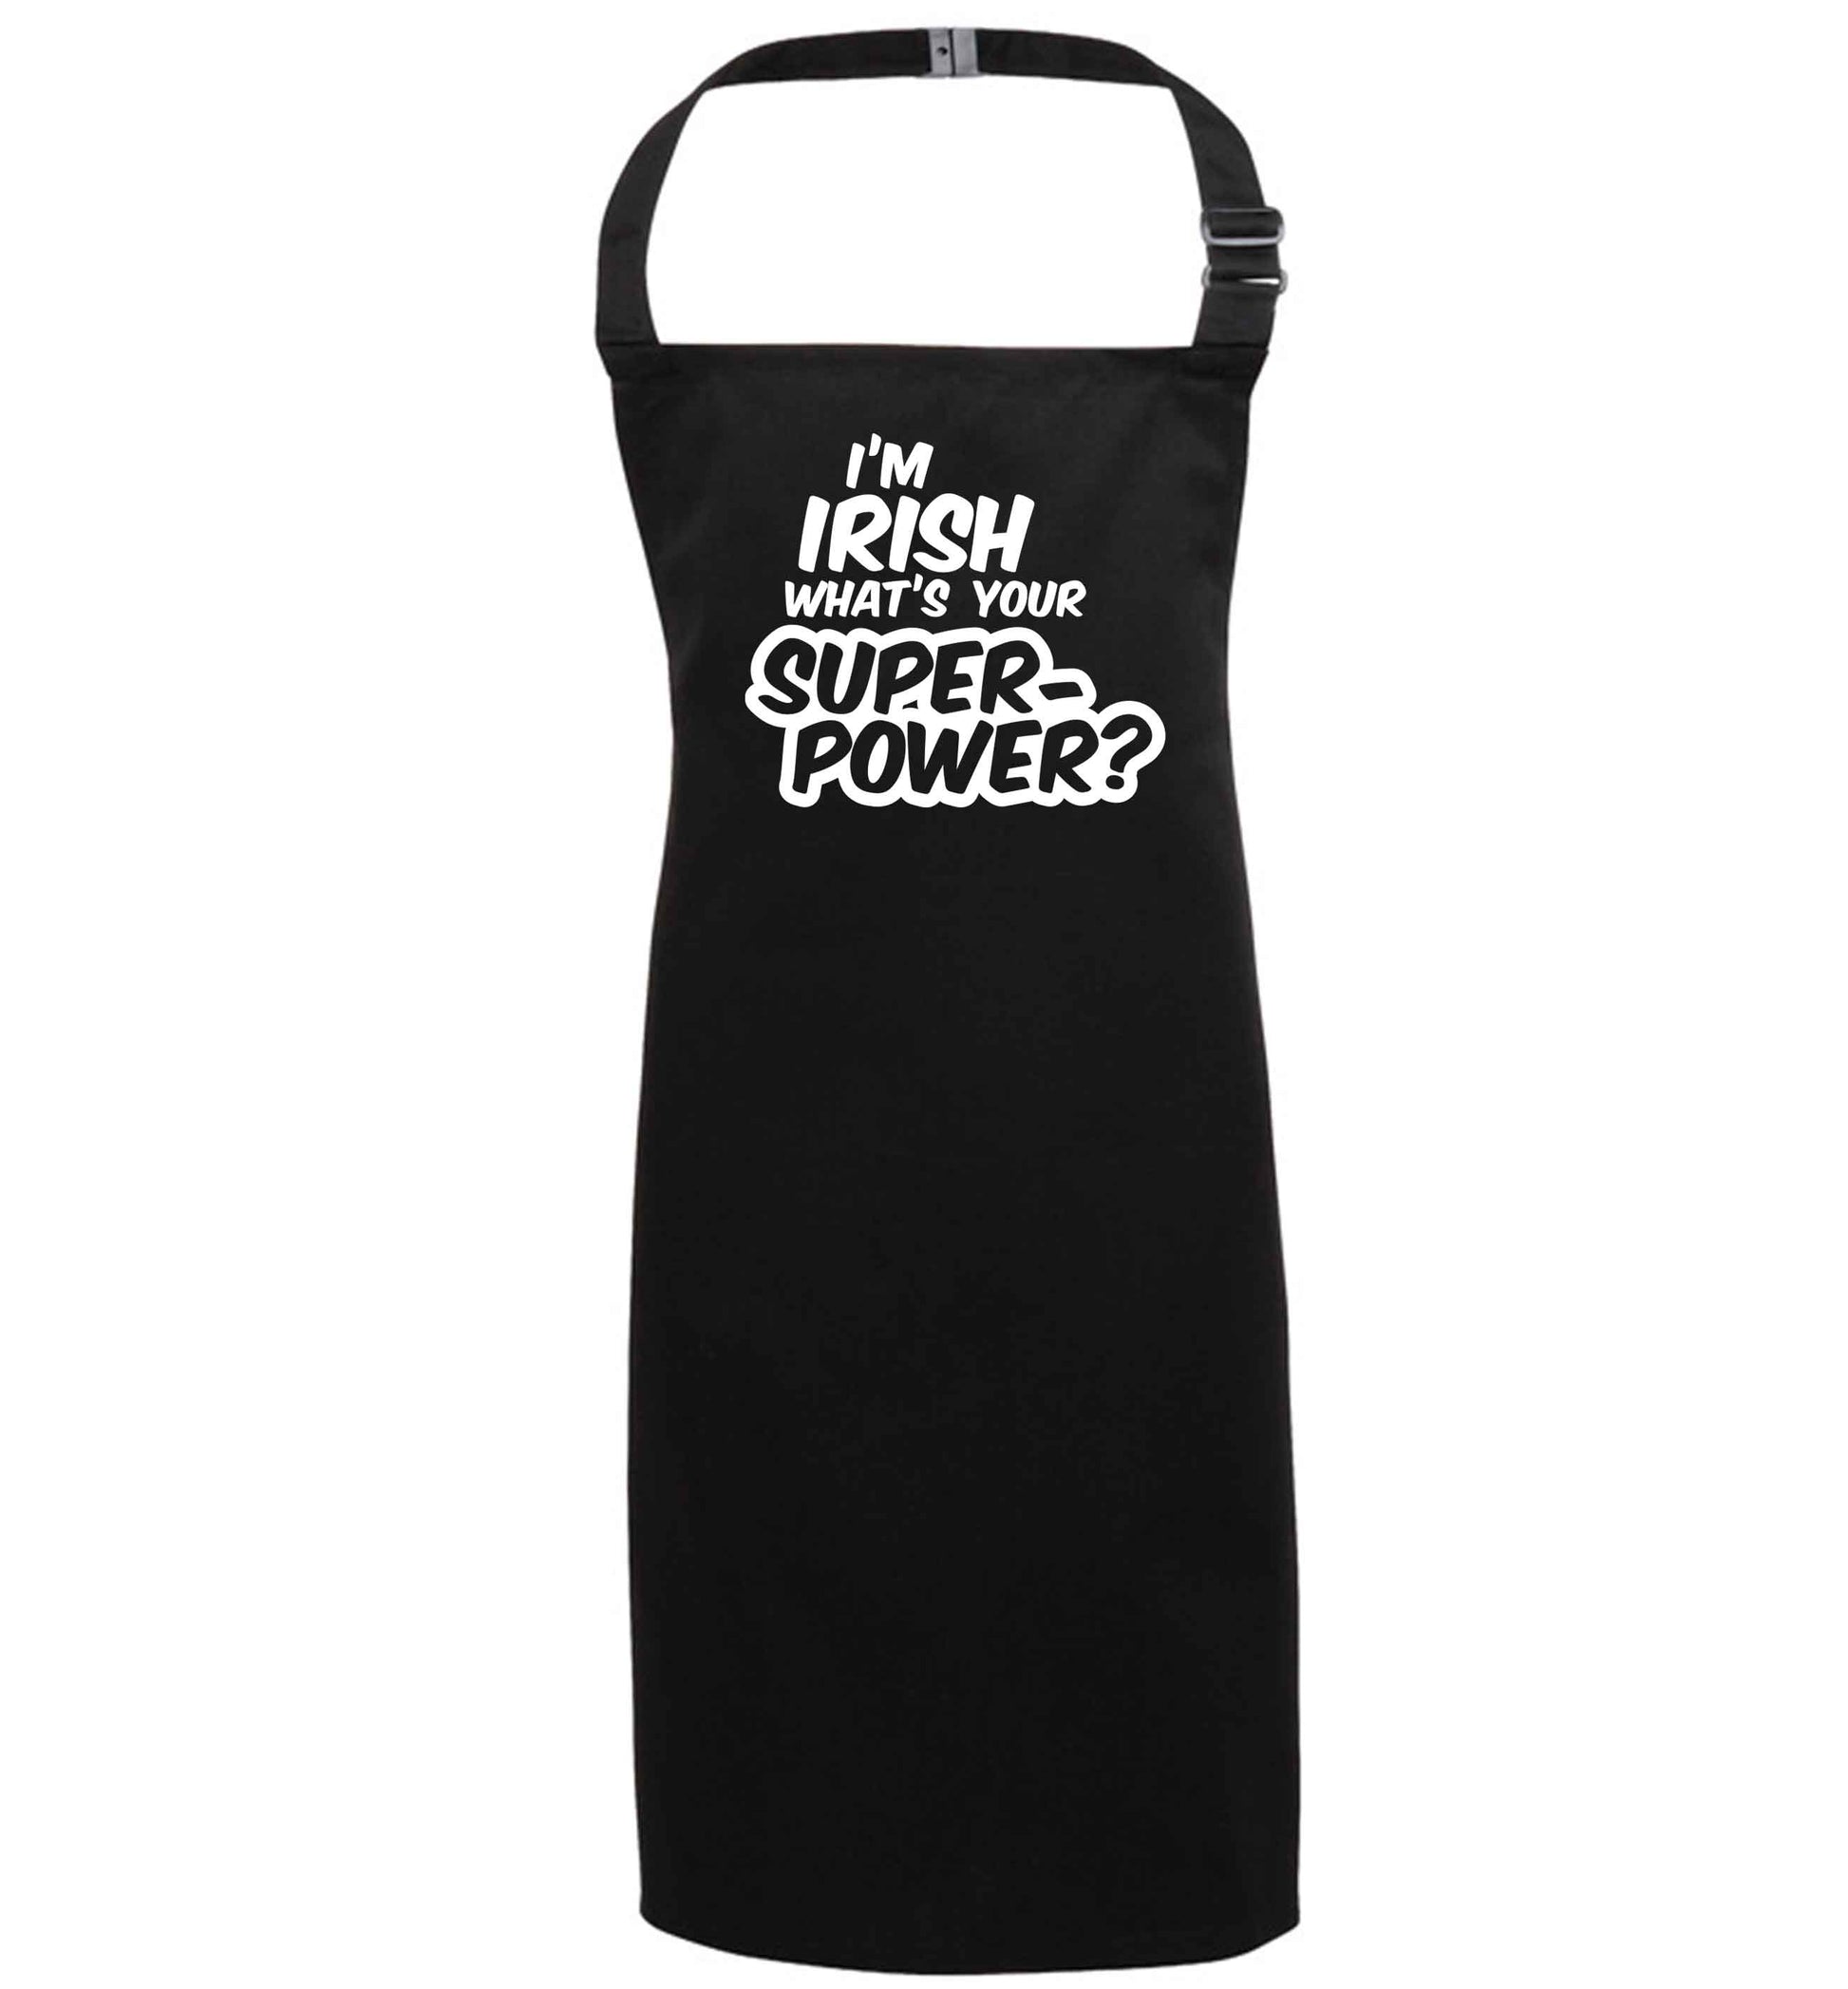 I'm Irish what's your superpower? black apron 7-10 years